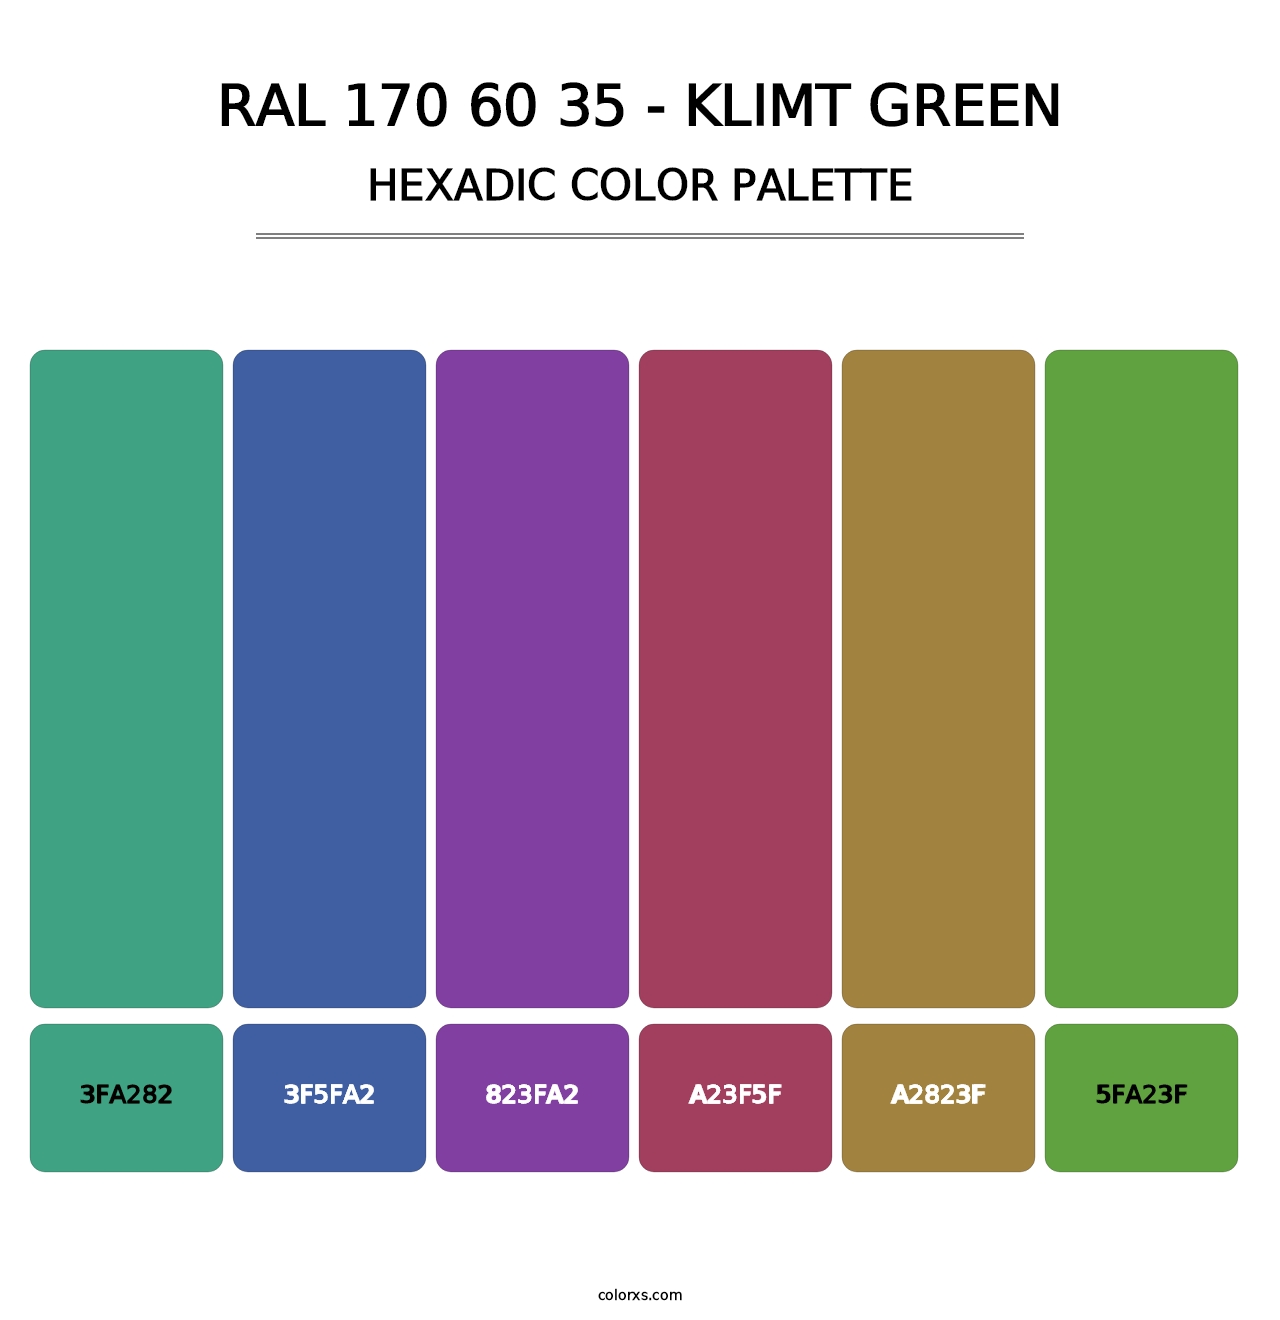 RAL 170 60 35 - Klimt Green - Hexadic Color Palette